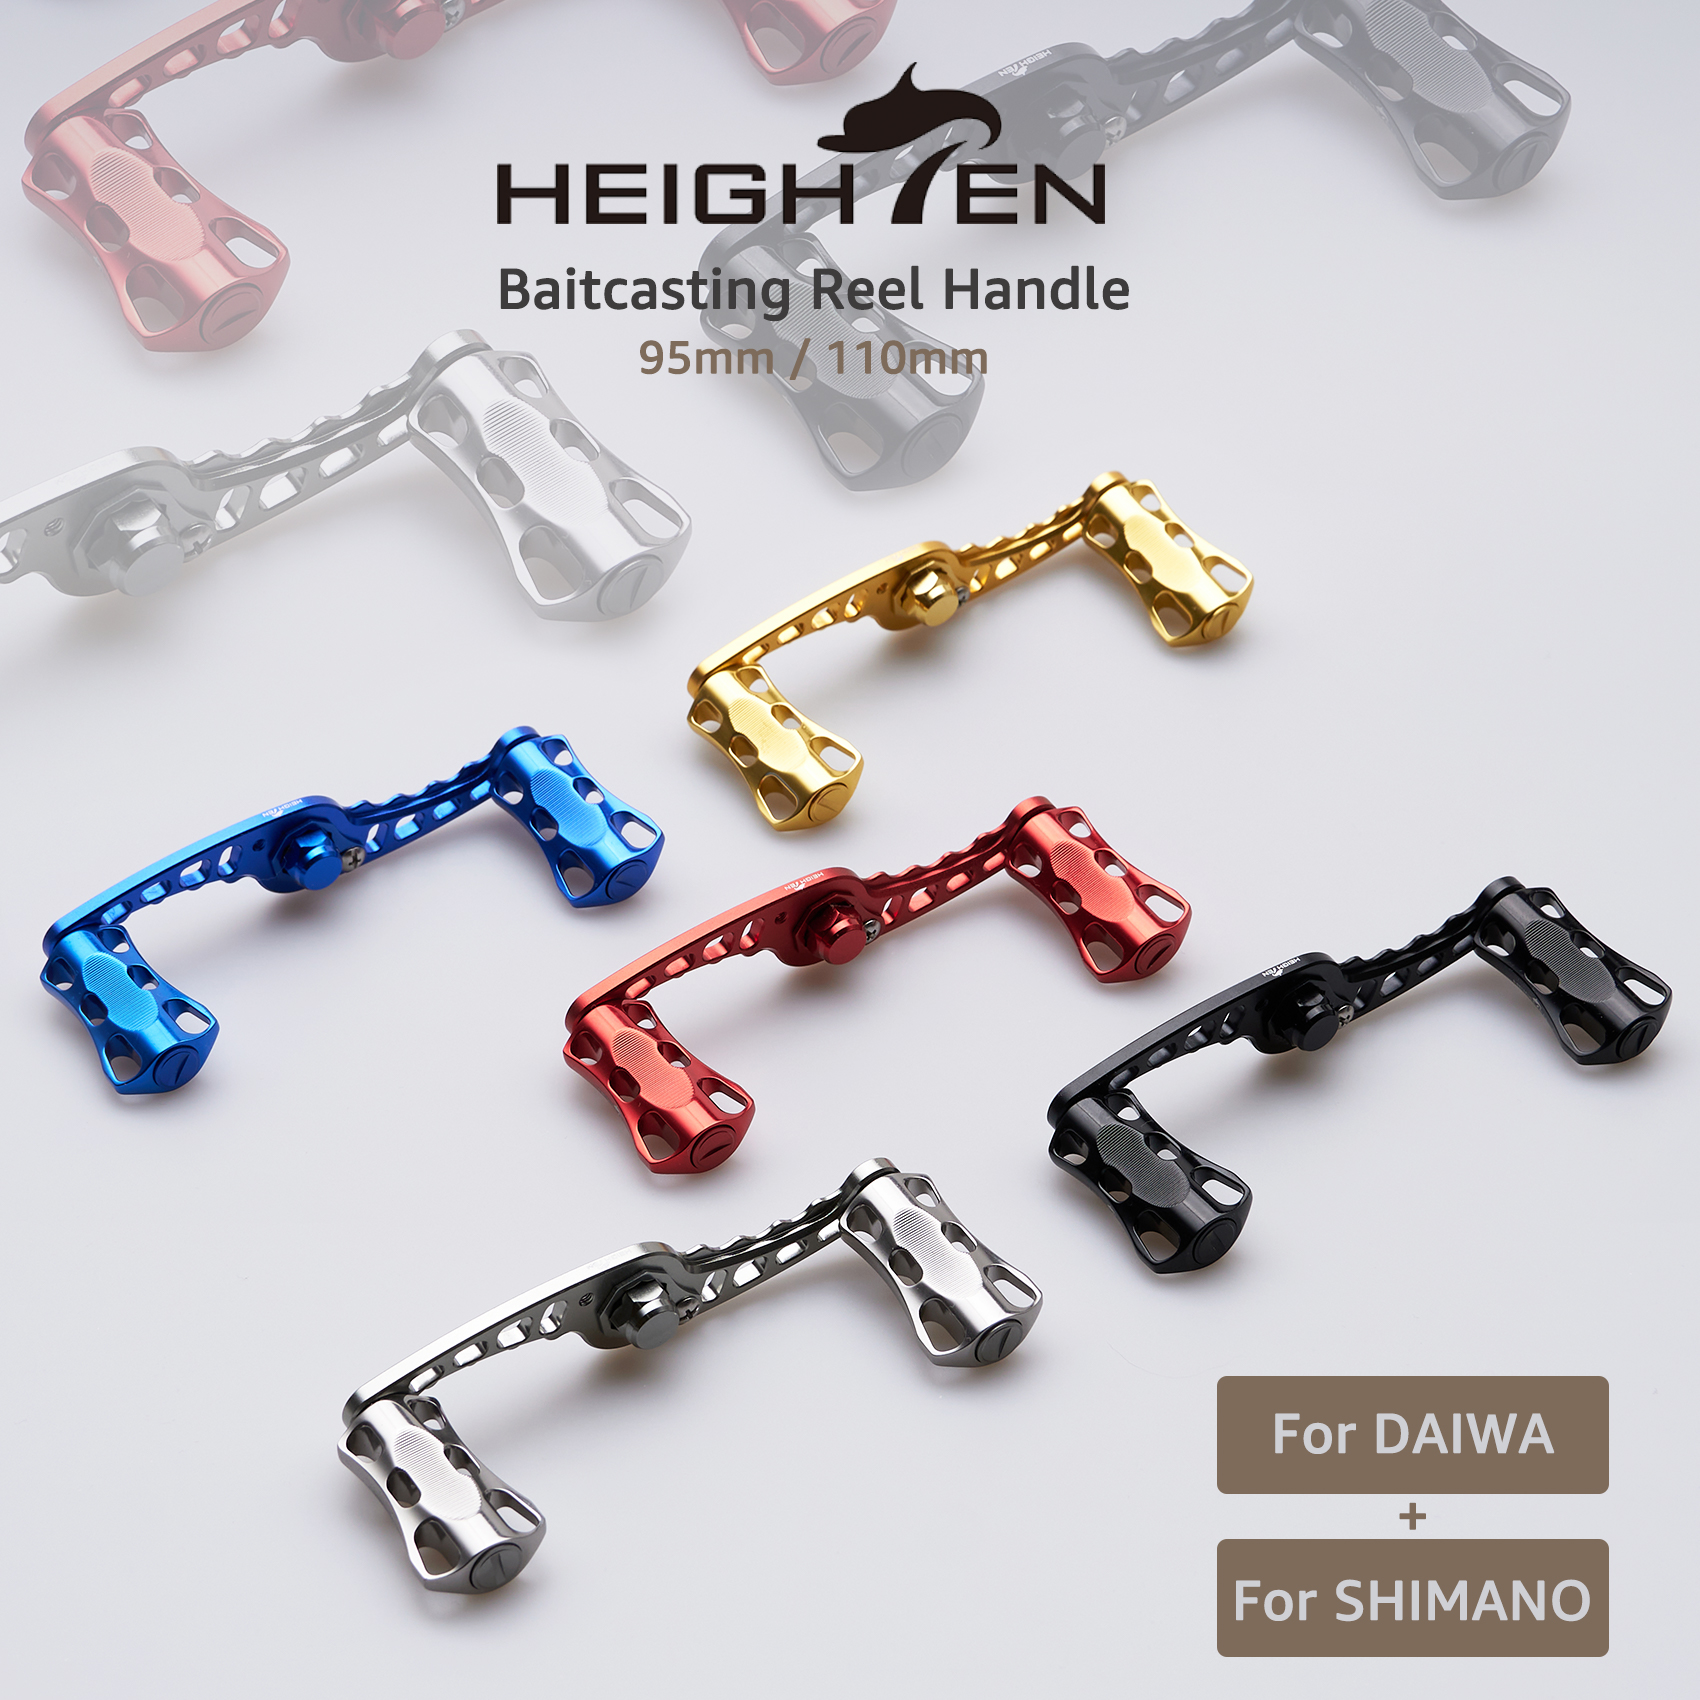 HEIGHTEN Baitcasting Reel Handle 95mm 110mm for Shimano Daiwa Baitcasting  Reel